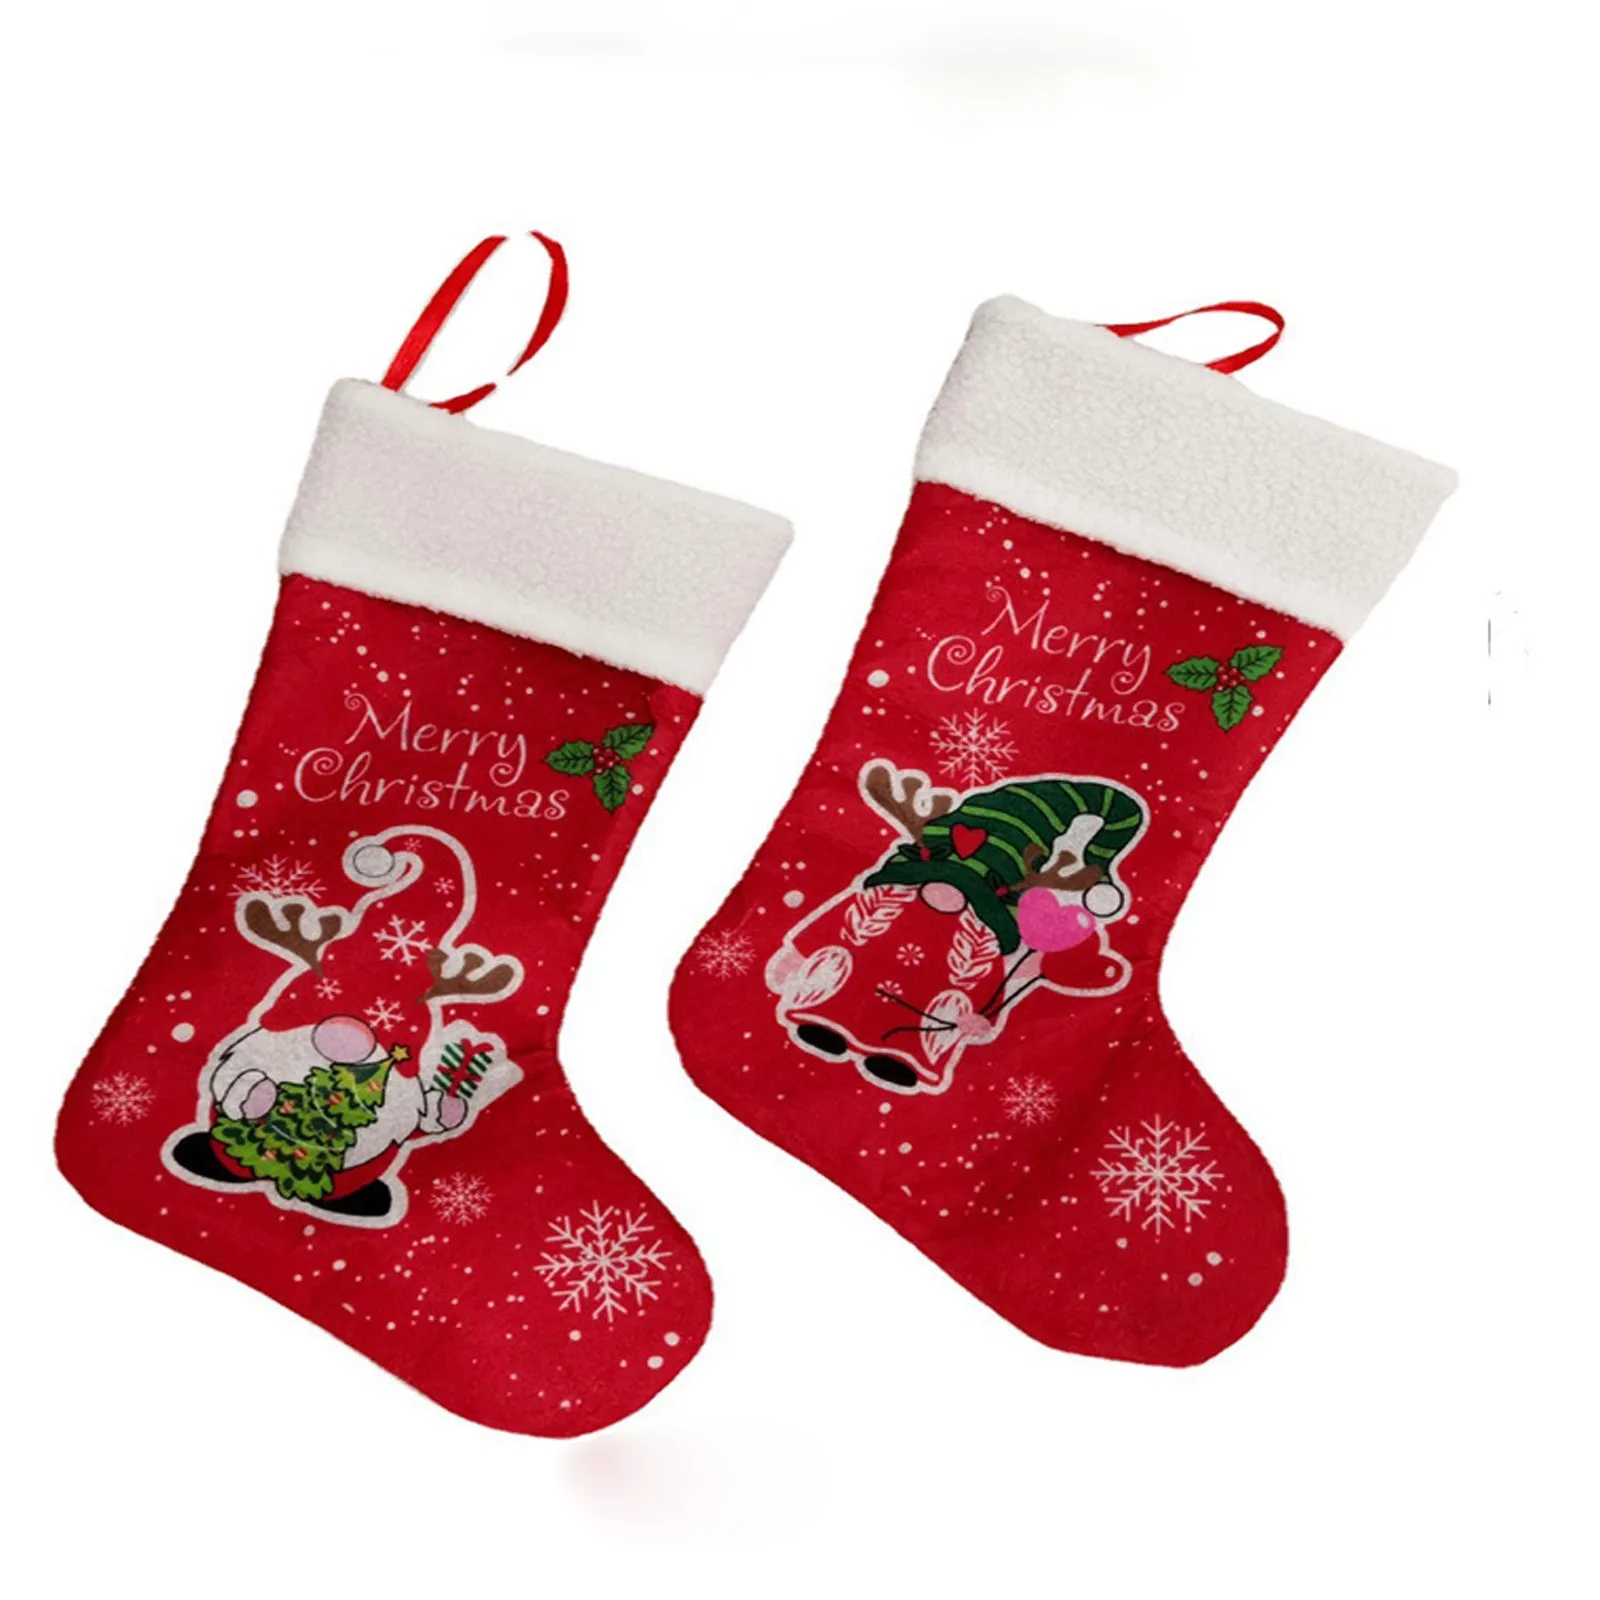 Lot 68 pcs Socks Sock Kinder Ferrero 2020 Hag Epiphany Christmas Decorations NEW 